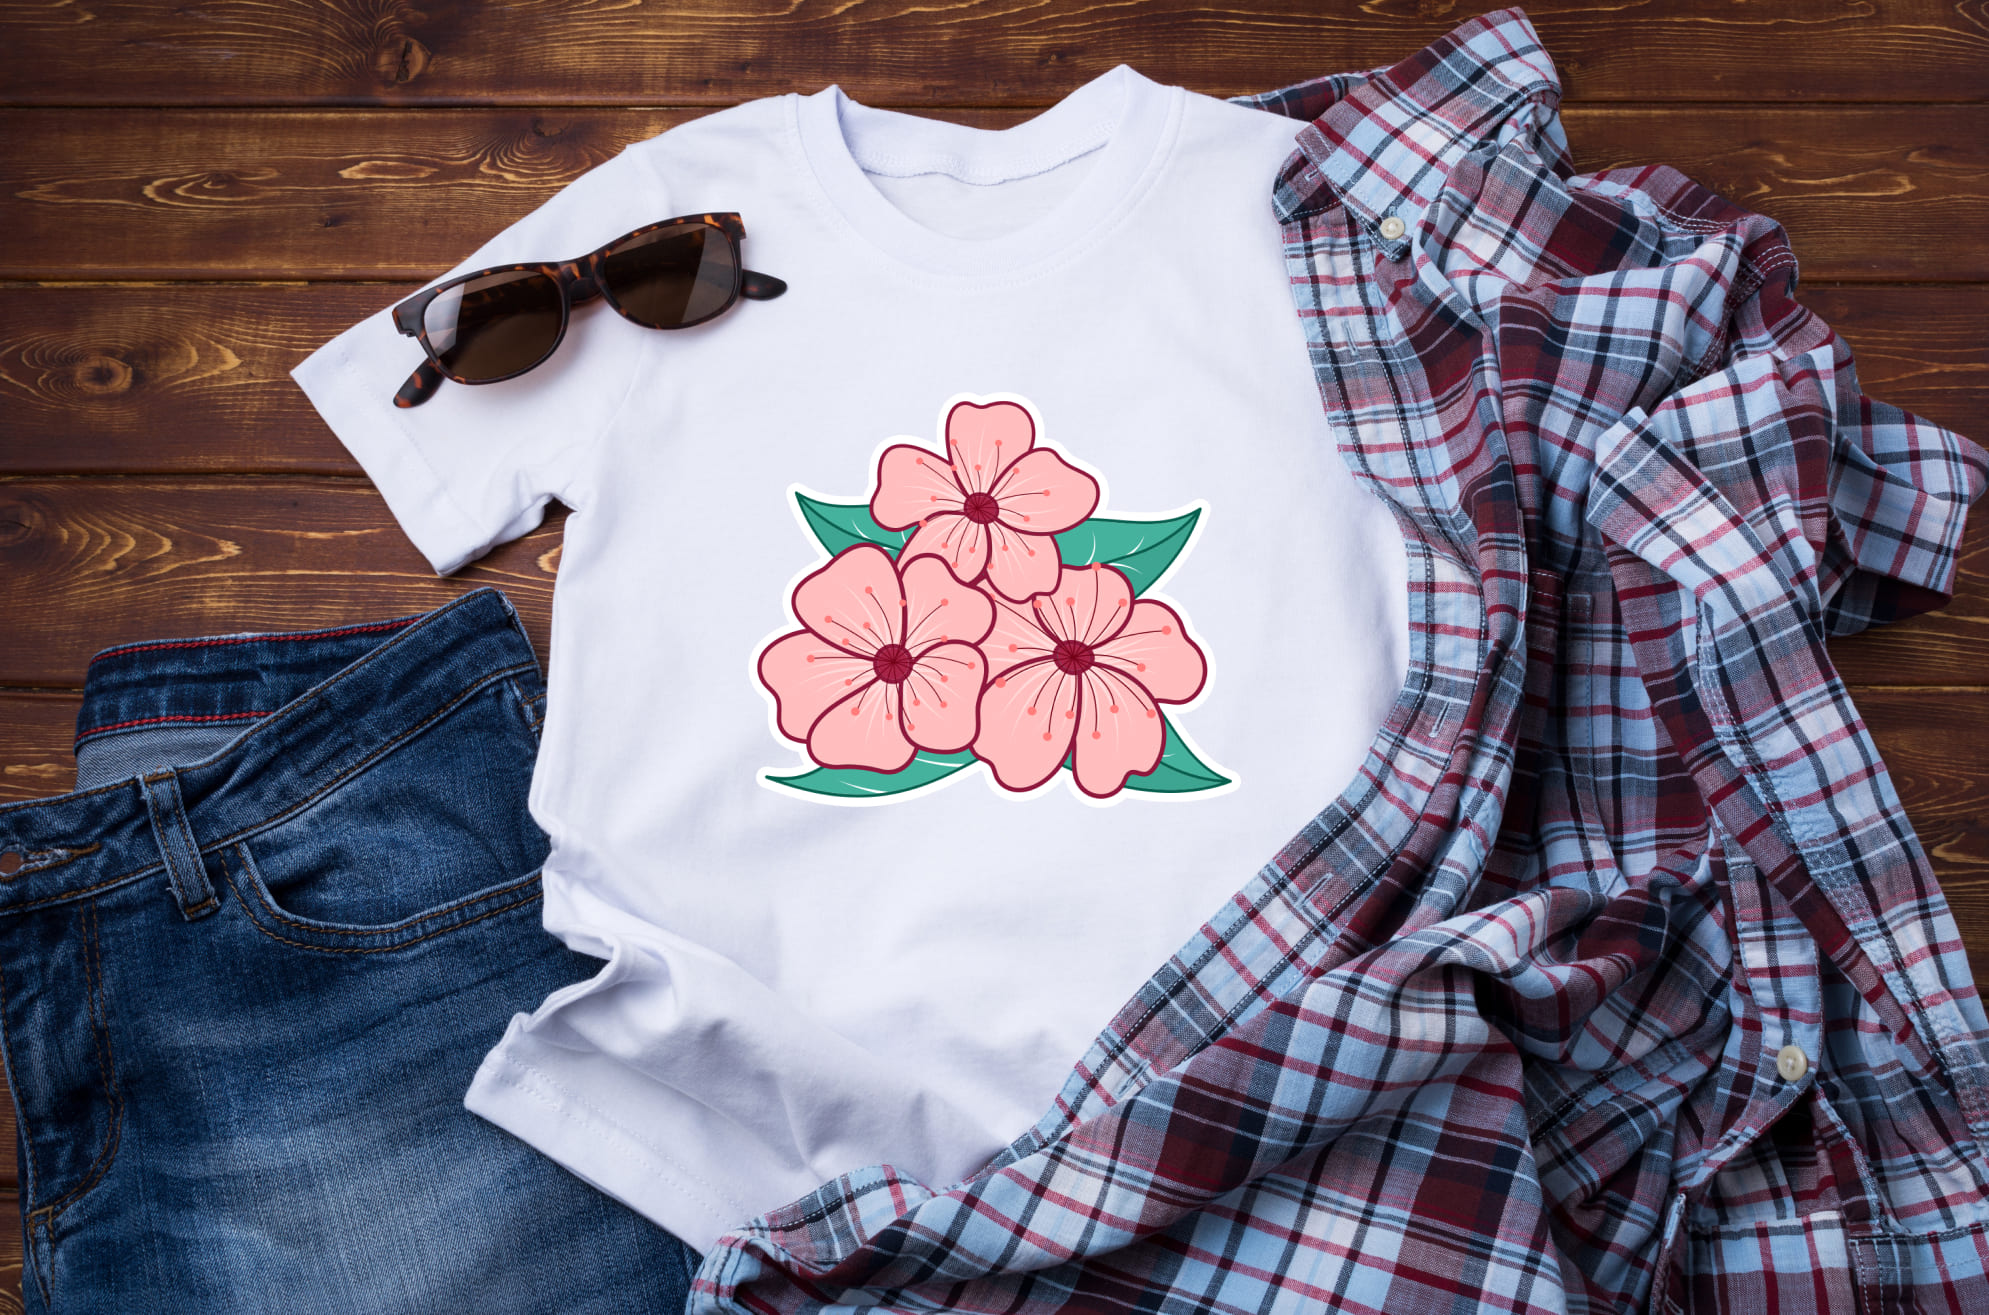 sakura cherry blossom t shirt designs 09 945